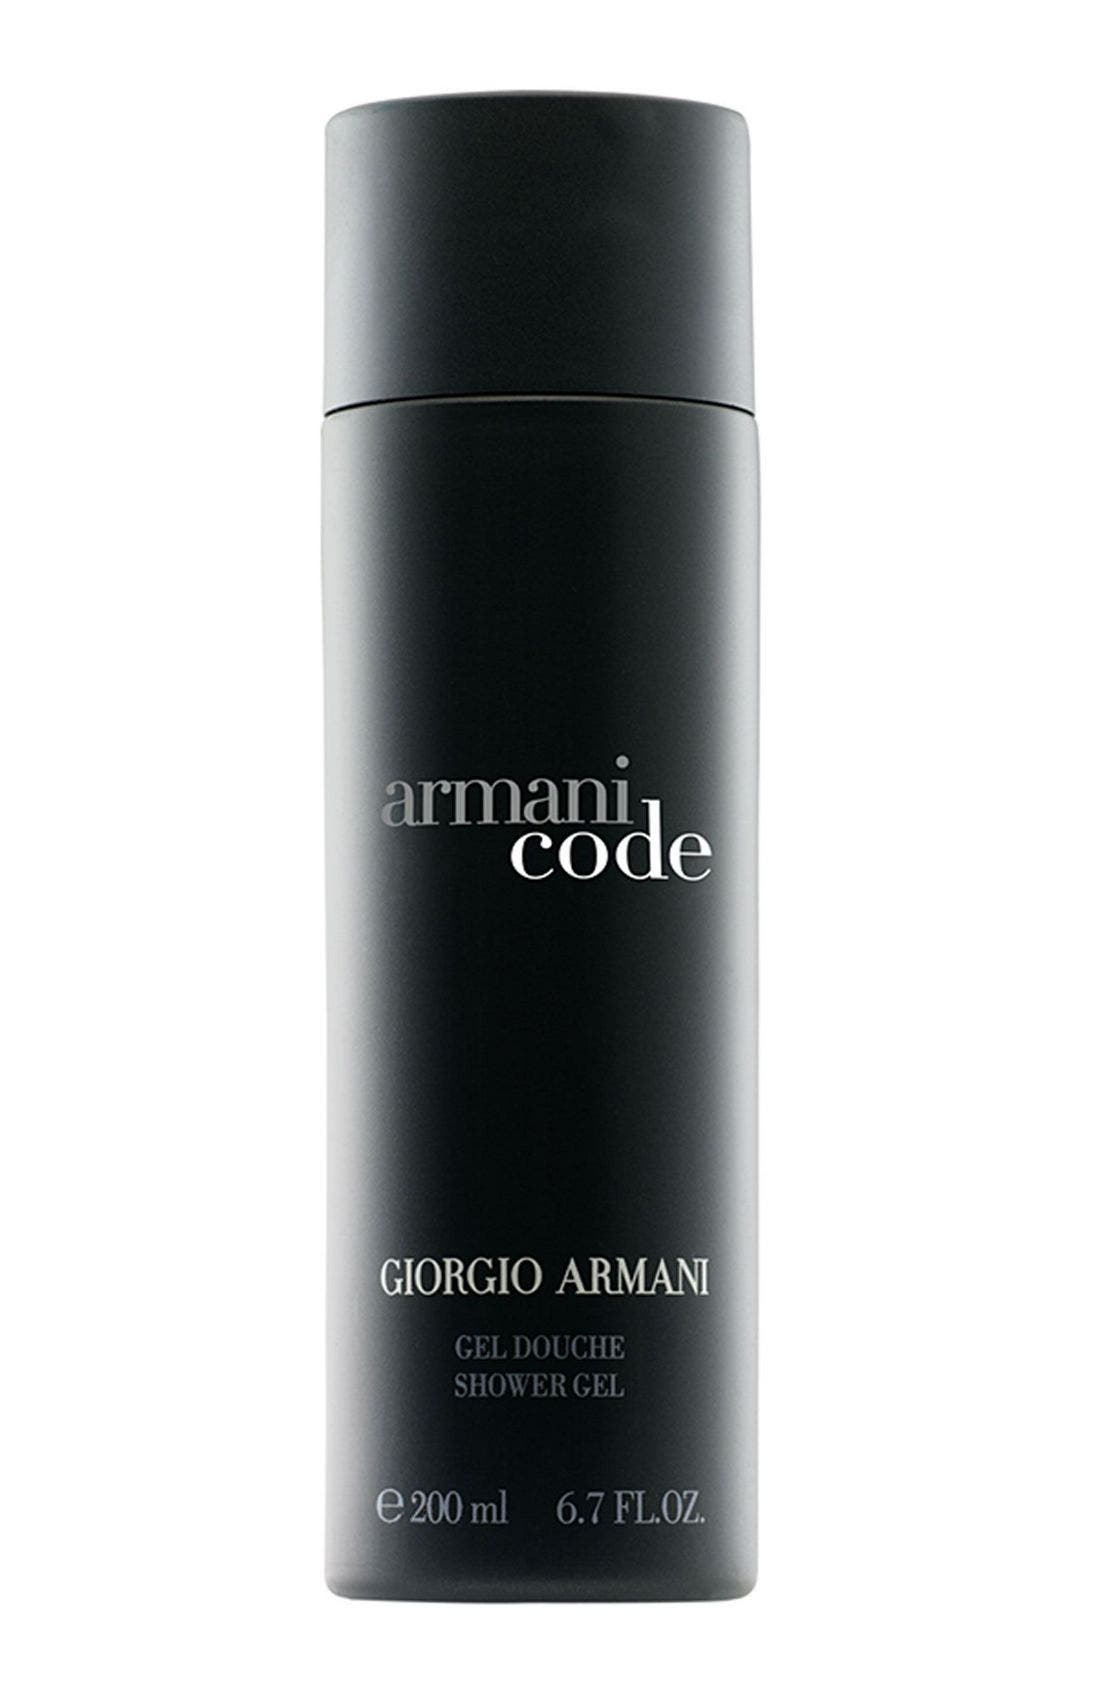 armani code shower